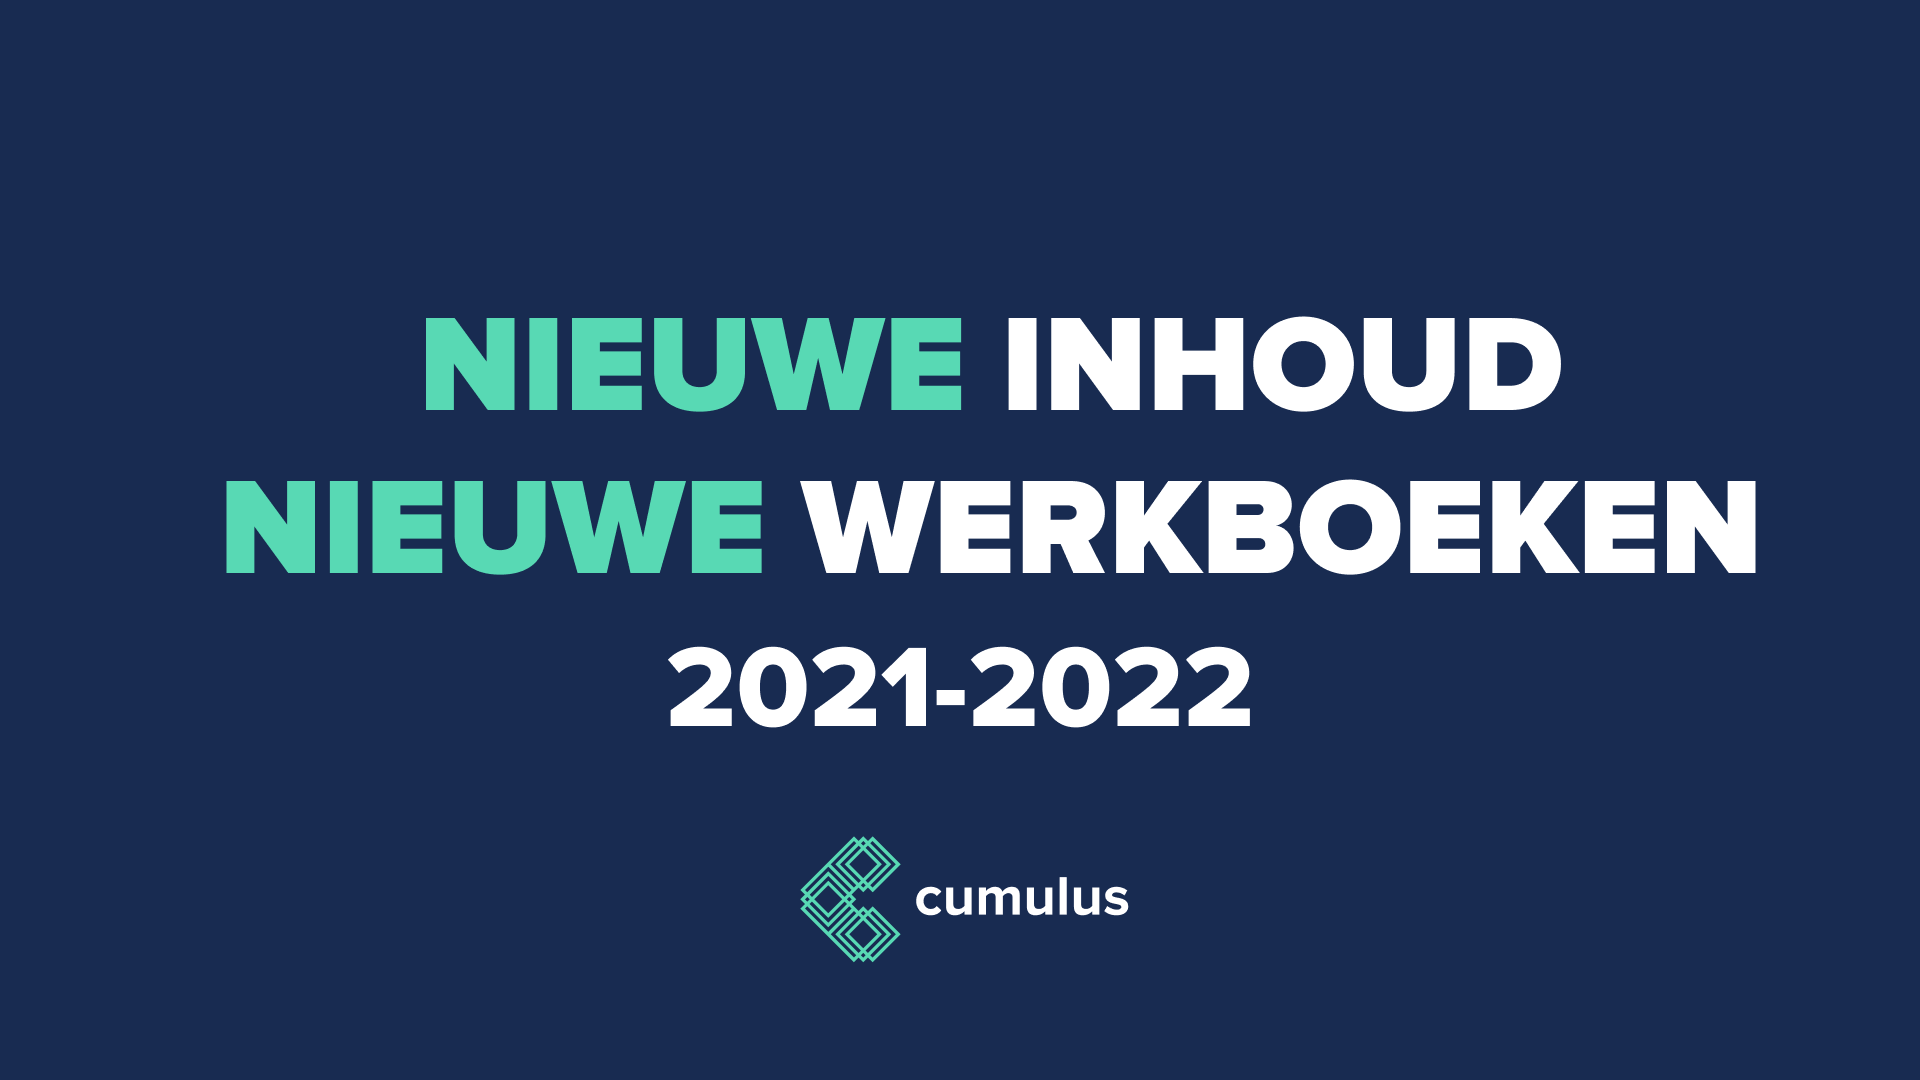 Cumulus 2021-2022 Nieuwe inhoud, nieuwe werkboeken